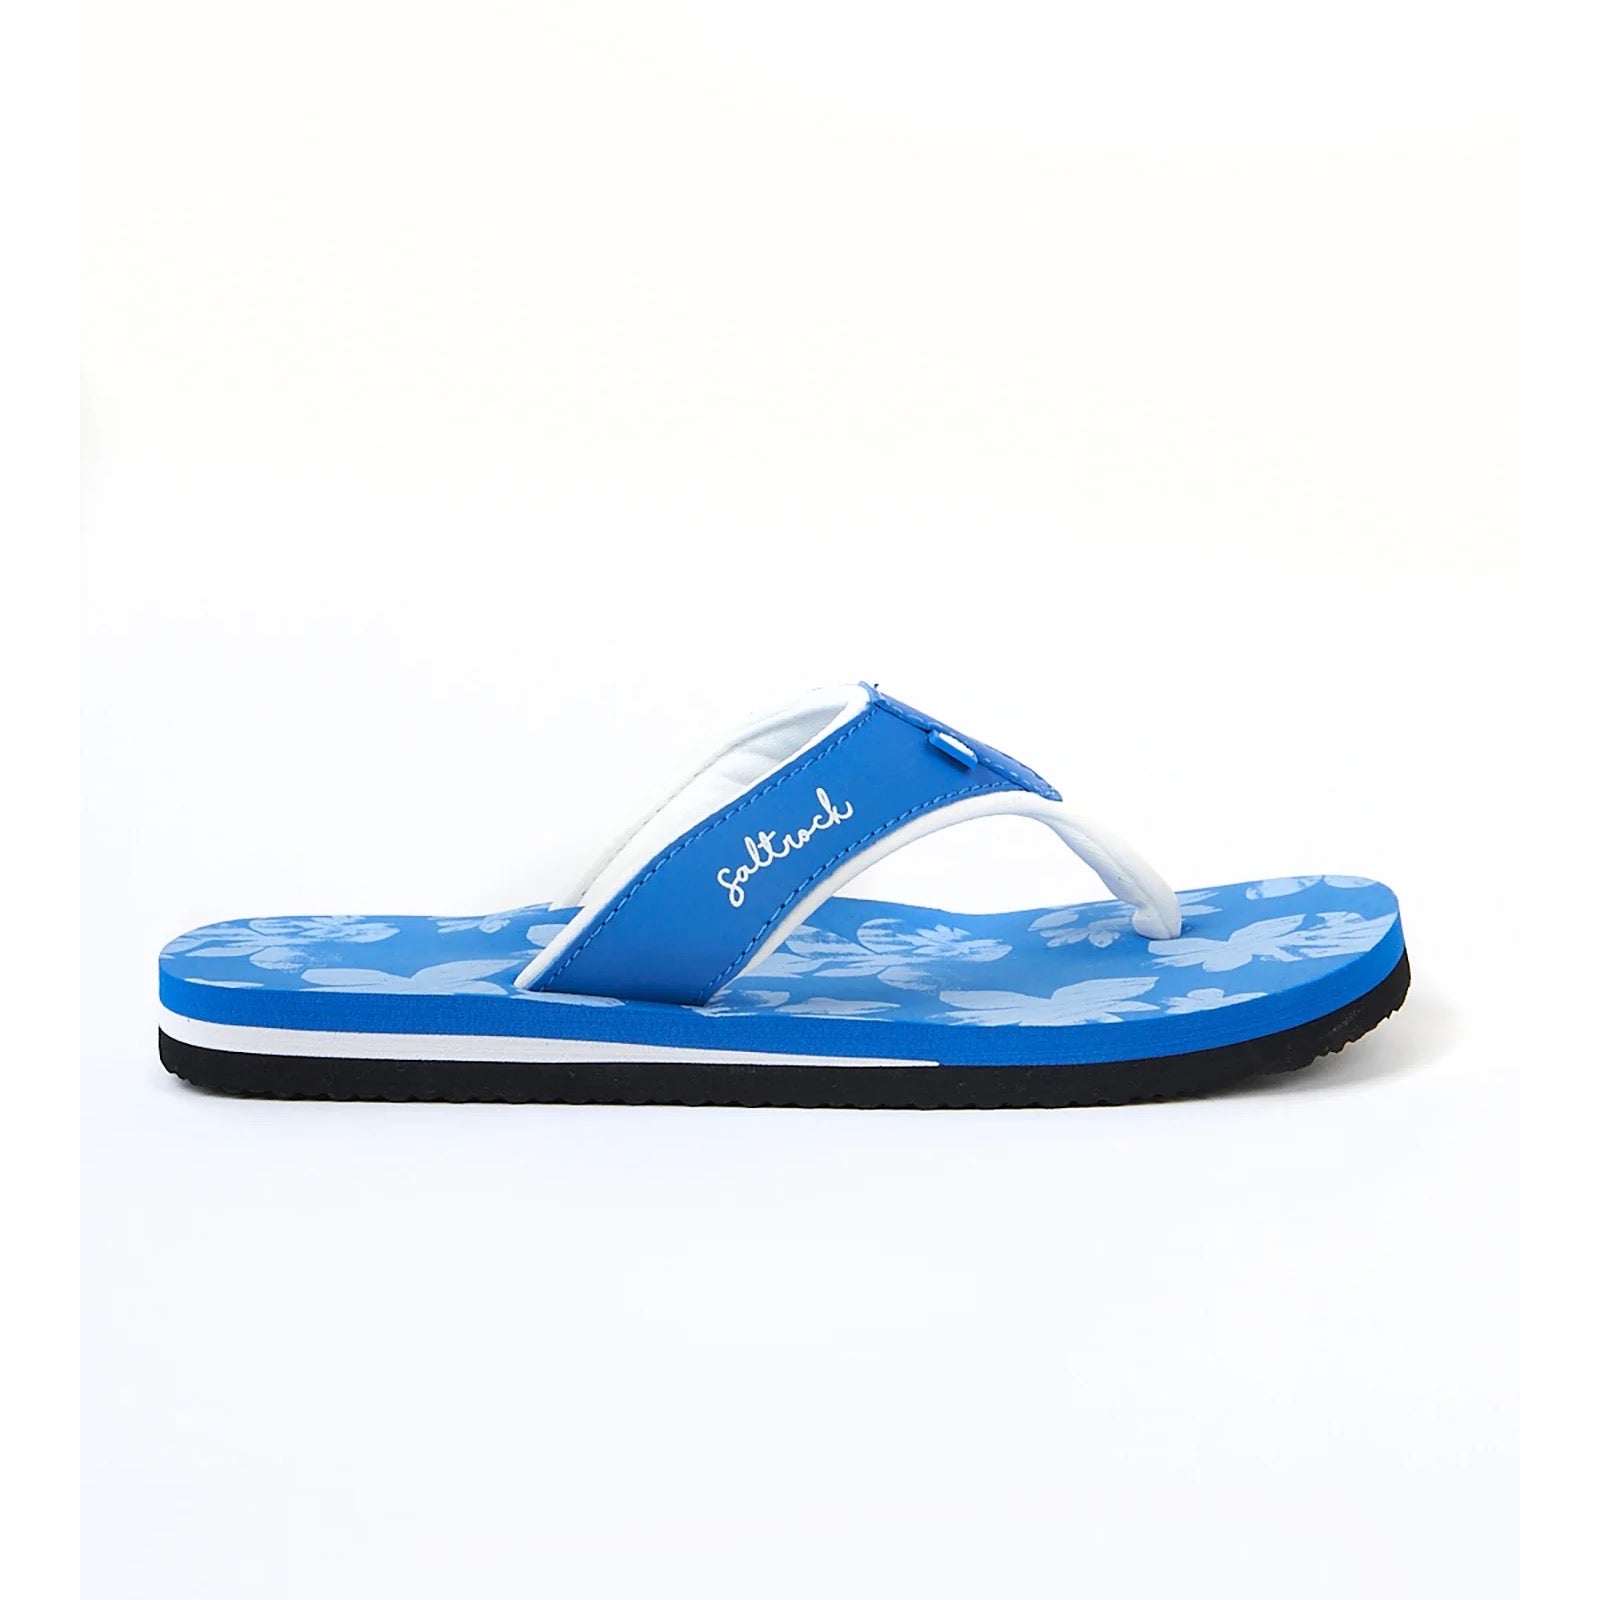 Saltrock Womens Floral Flip Flops Footwear EU 36 / Blue,EU 37 / Blue,EU 38 / Blue,EU 39 / Blue,EU 40 / Blue,EU 41 / Blue